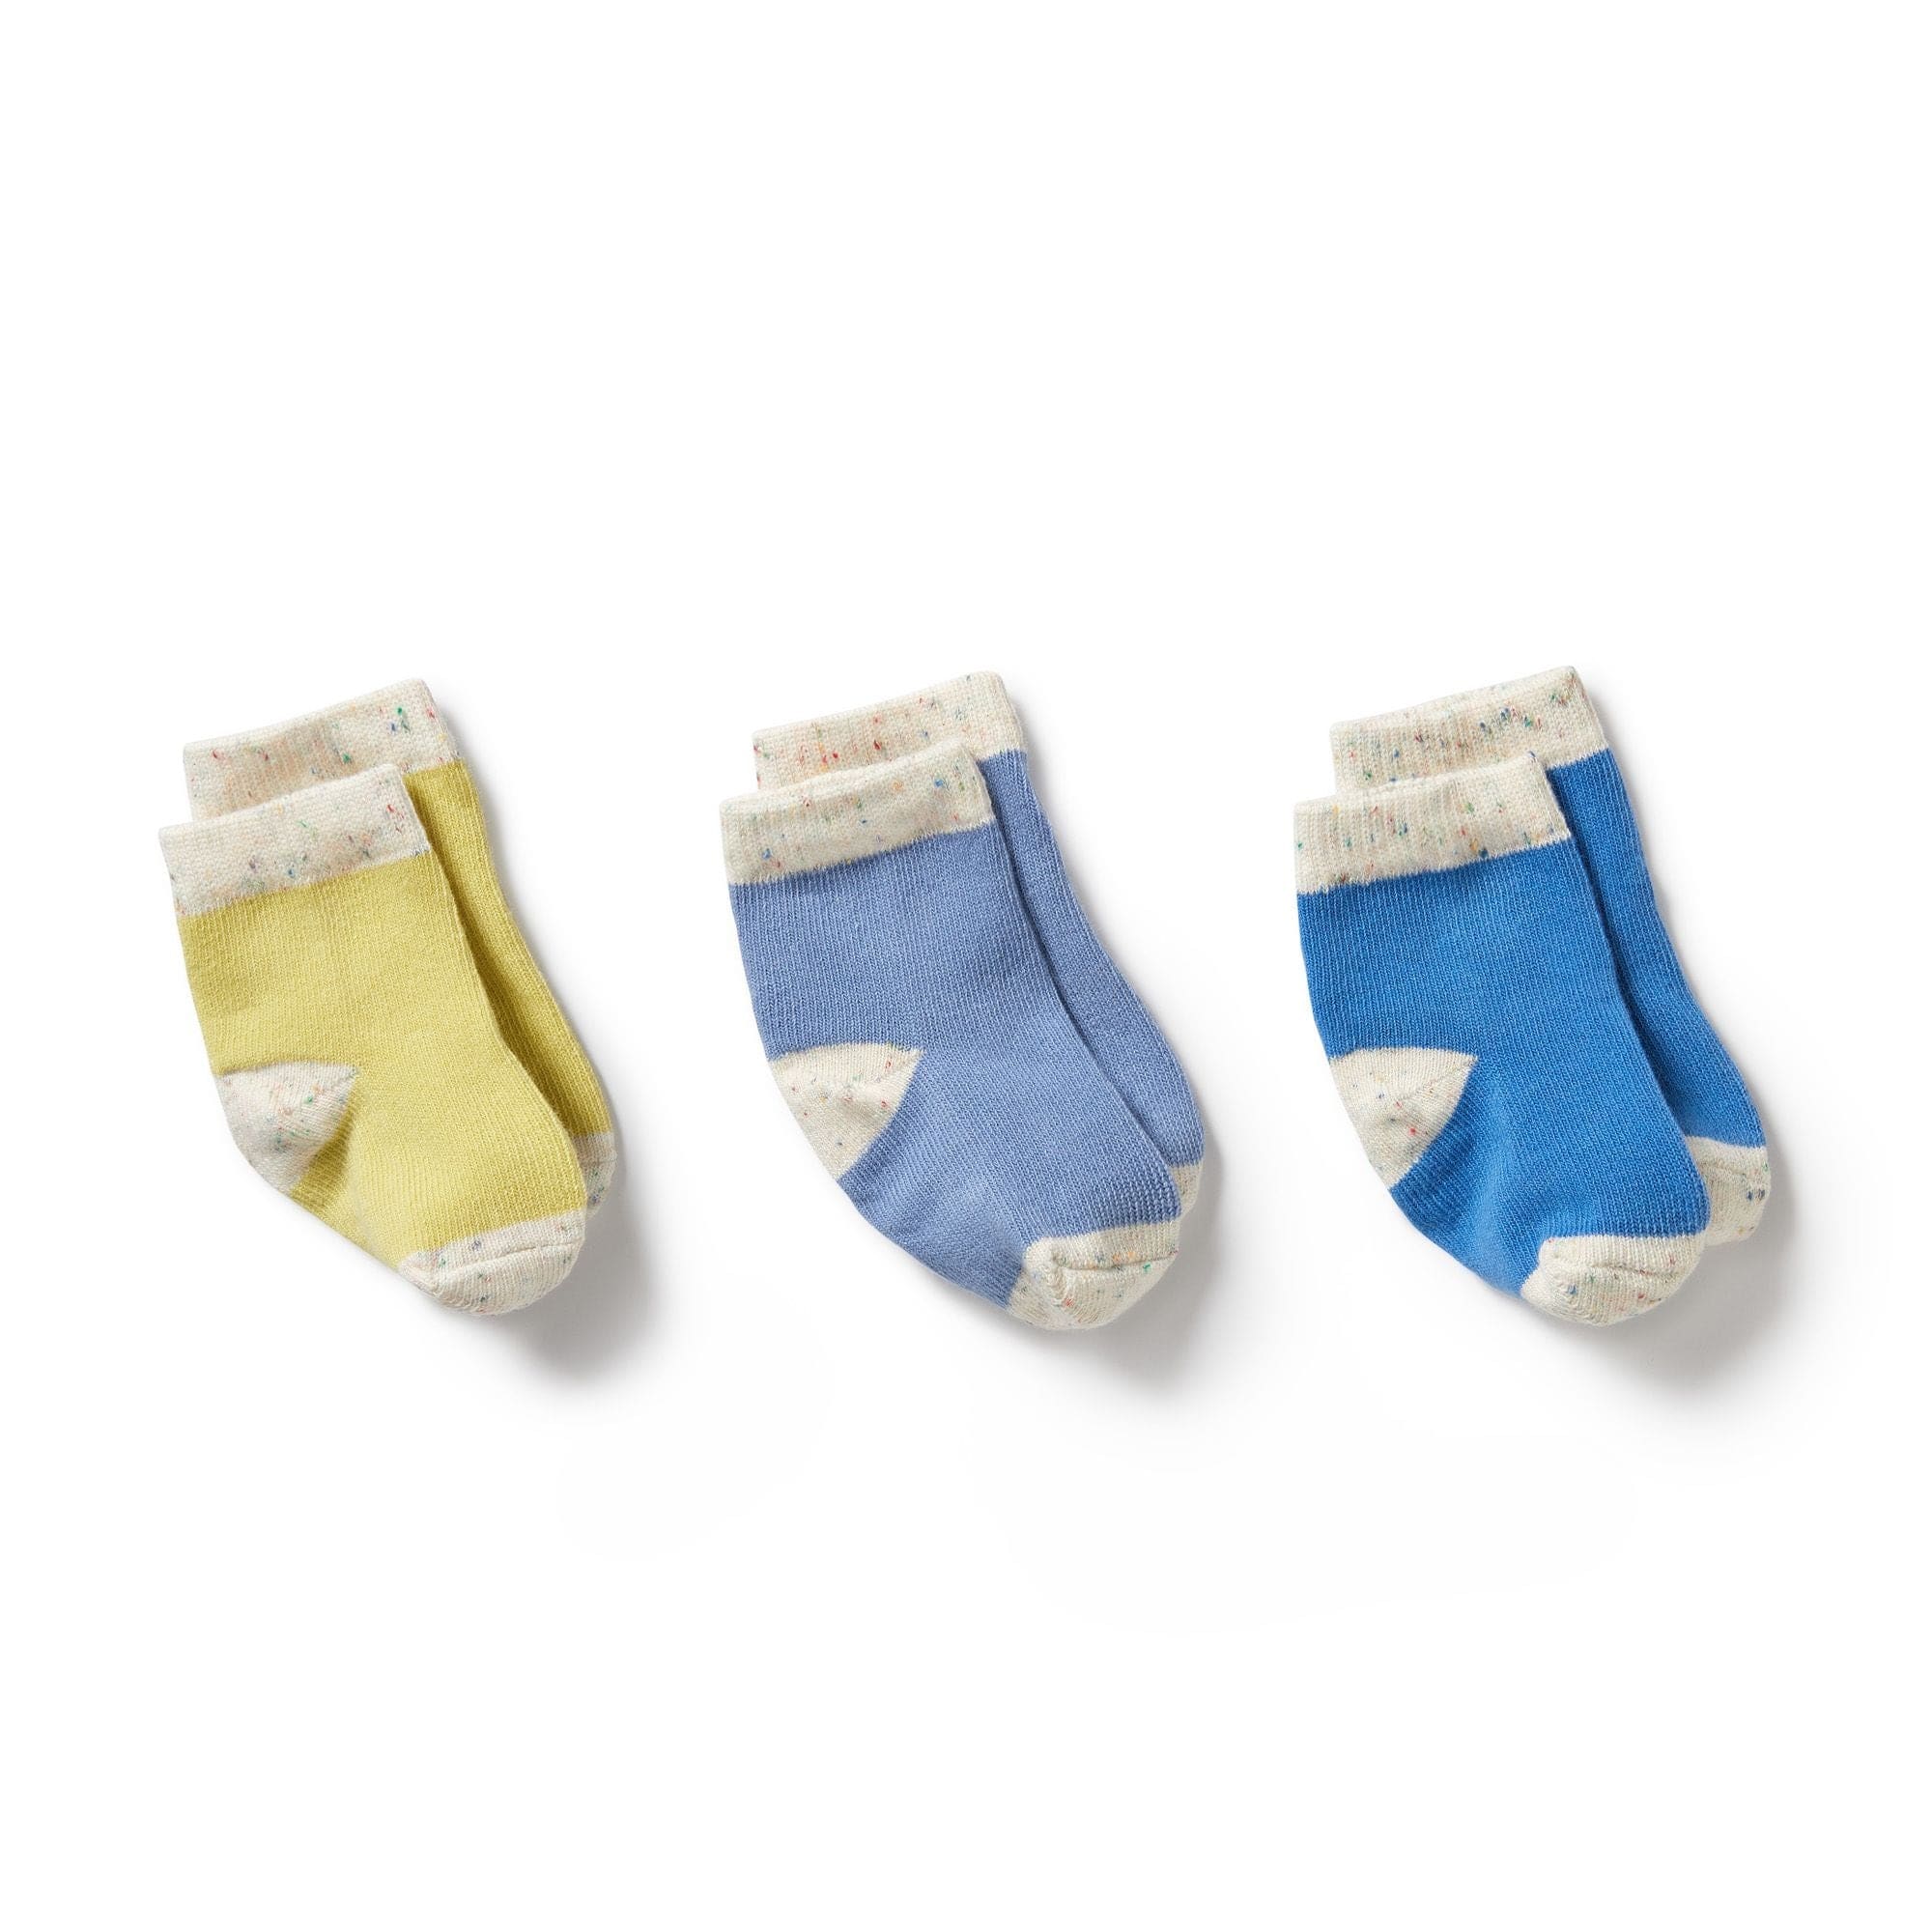 Wilson & Frenchy Accessory Socks Endive/Bluebell/Blue / 0-3M Organic 3 Pack Baby Socks